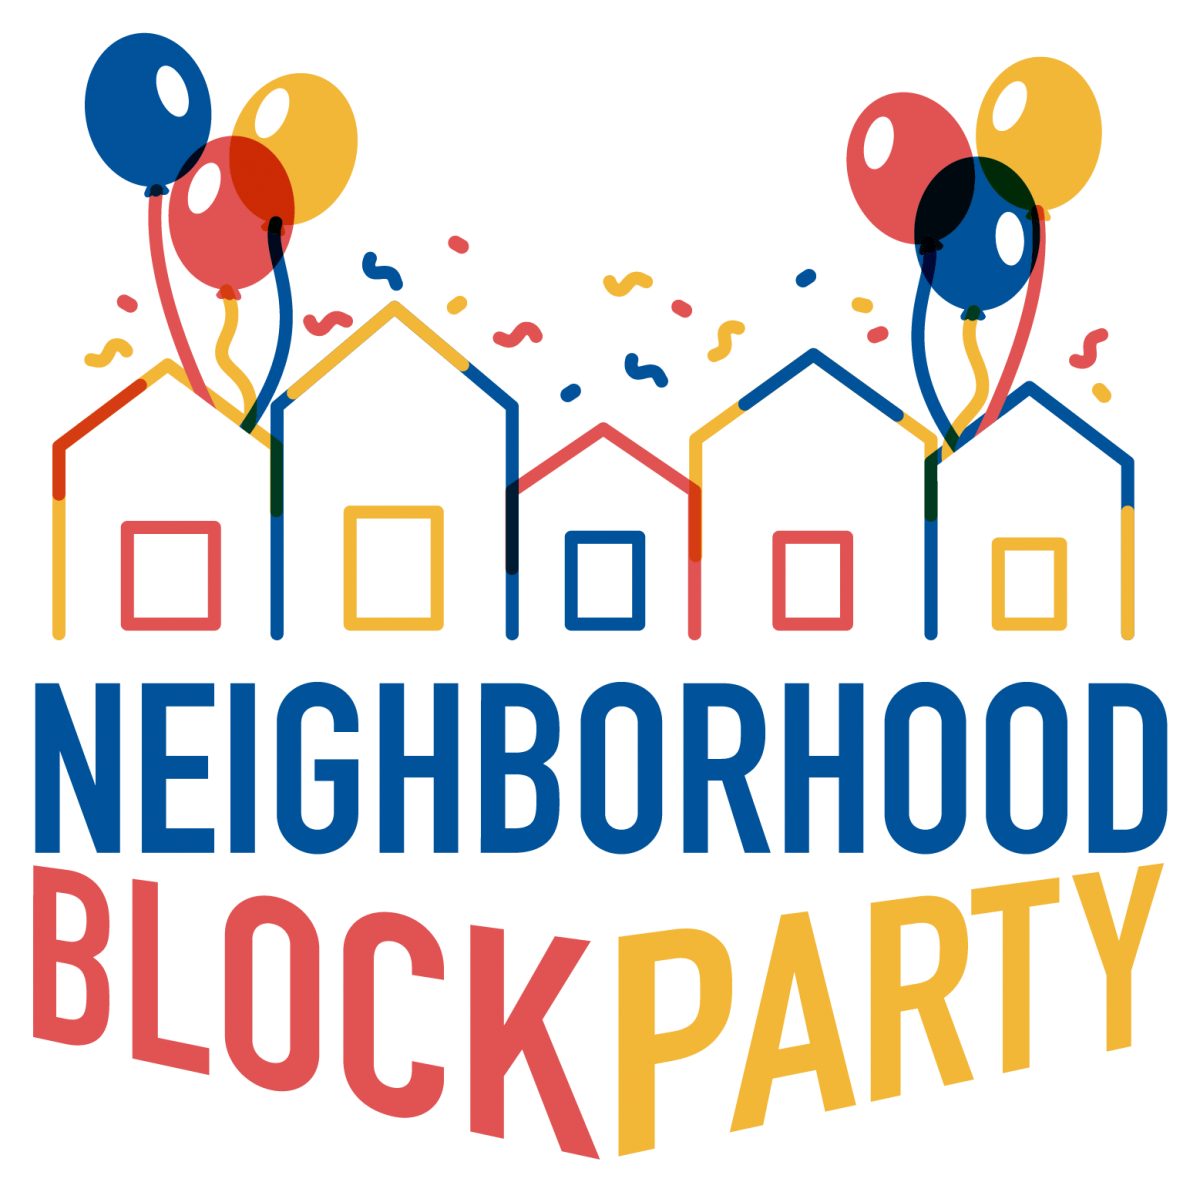 Neighborhood Block Party - First Christian Reformed Church